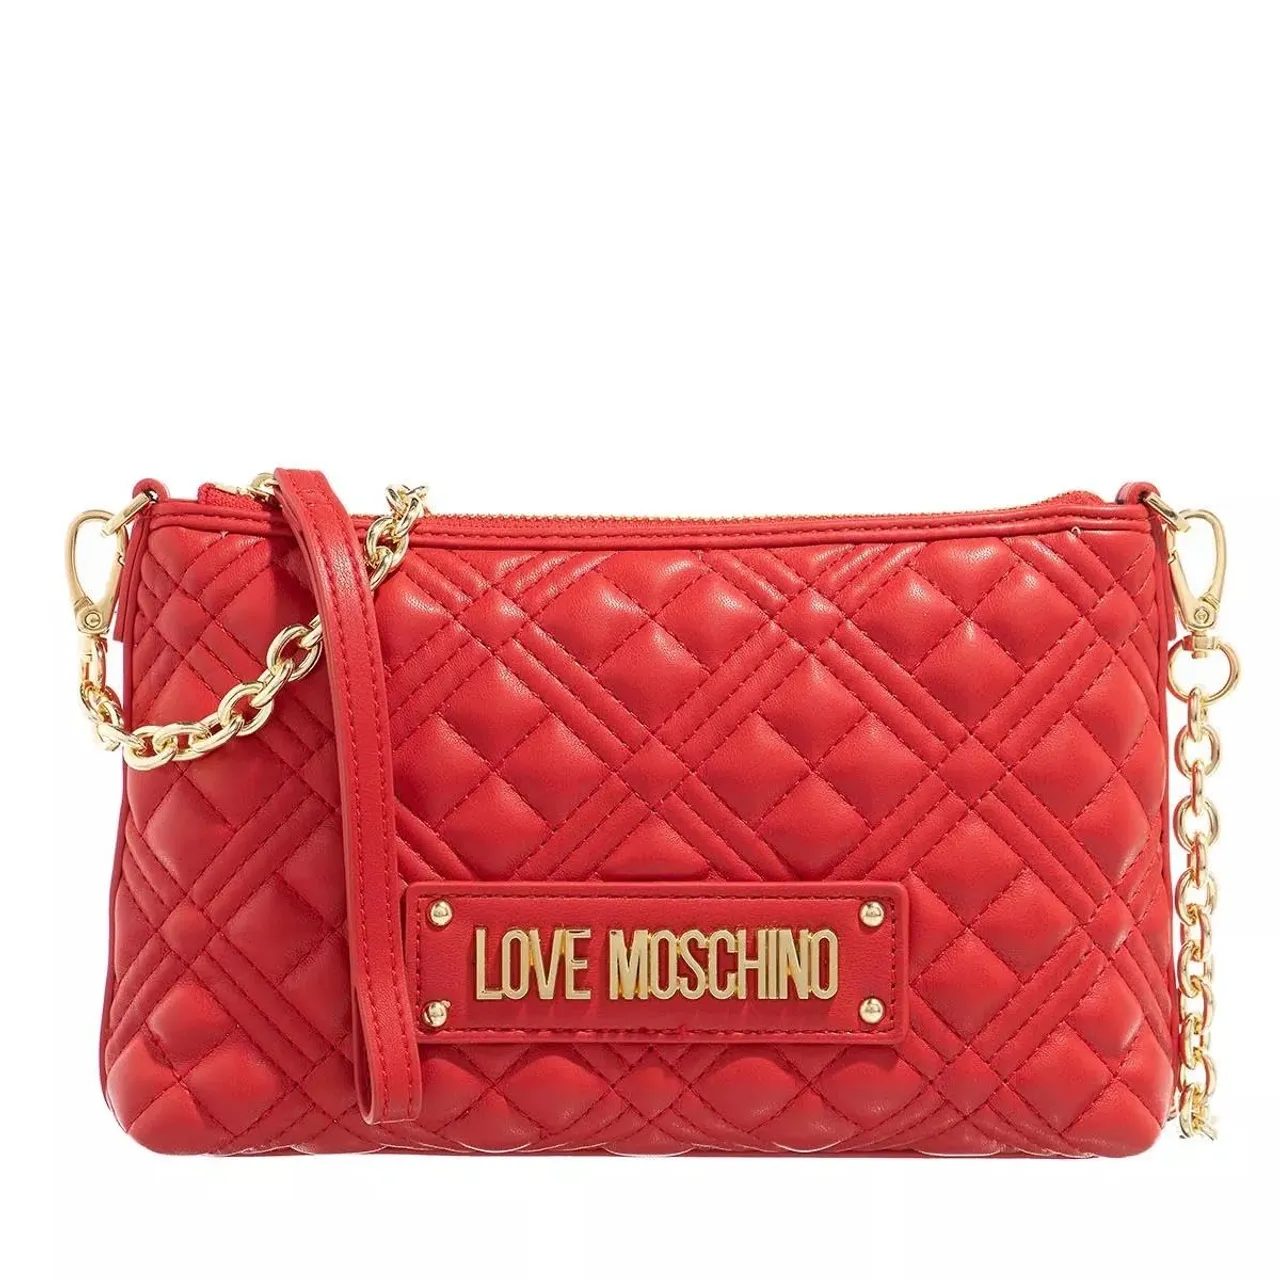 Love Moschino Women's Jc4013pp1fla0 Shoulder Bag